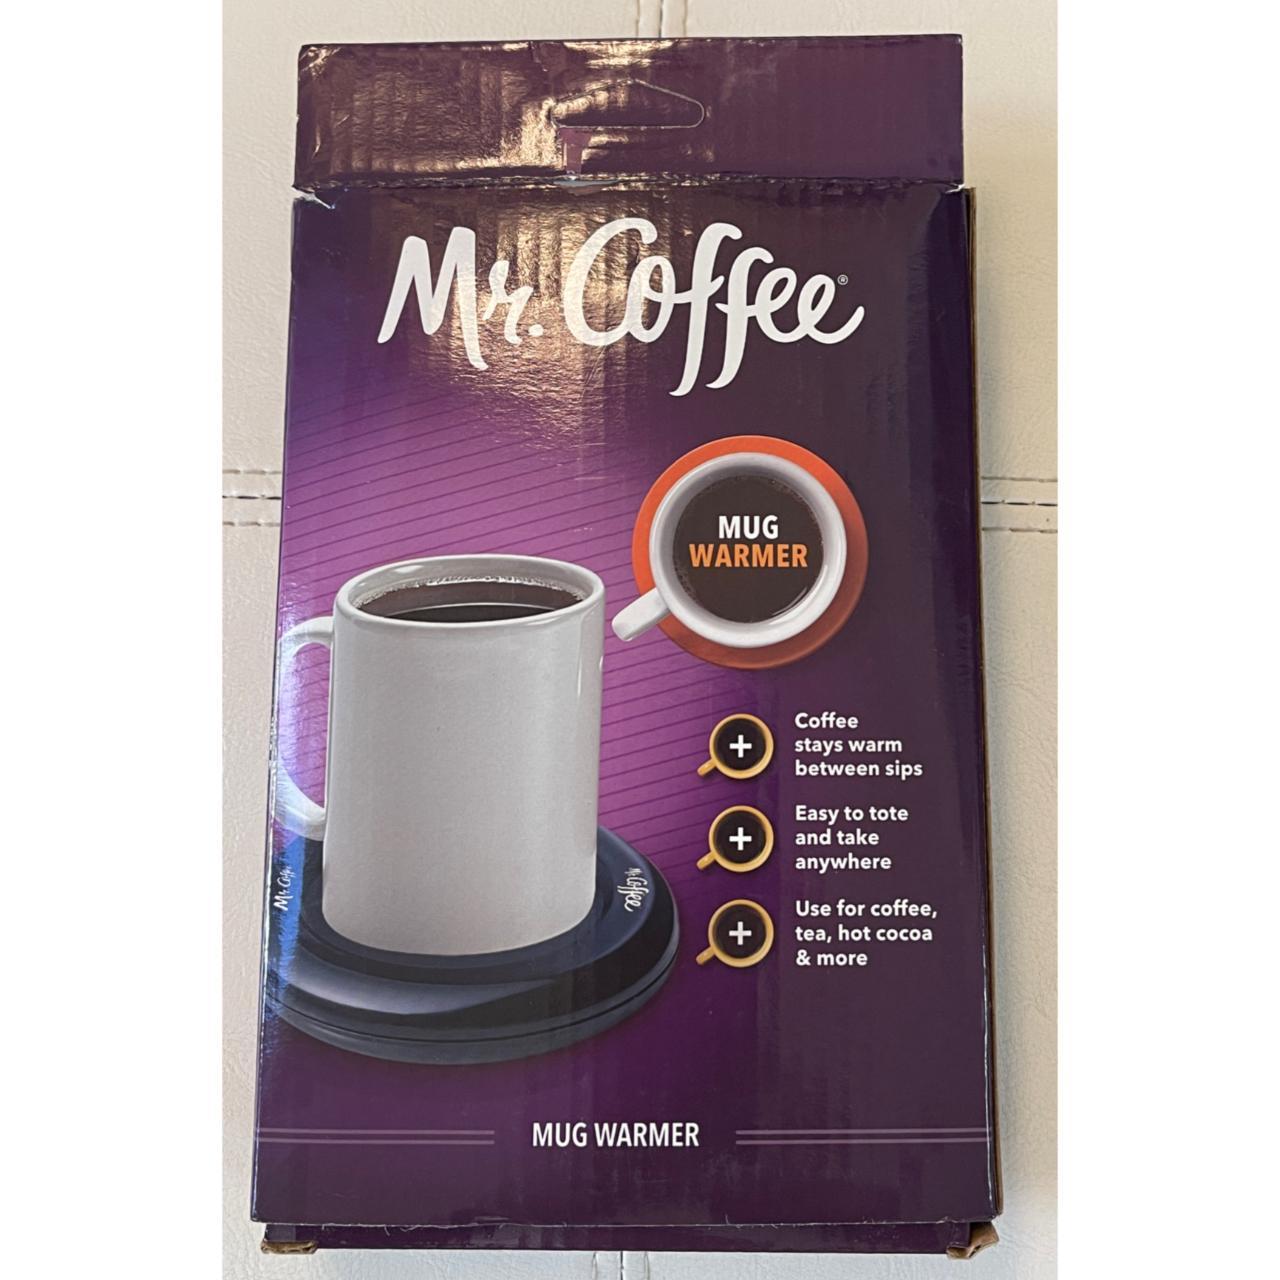 Mr.coffee Mug Warmer